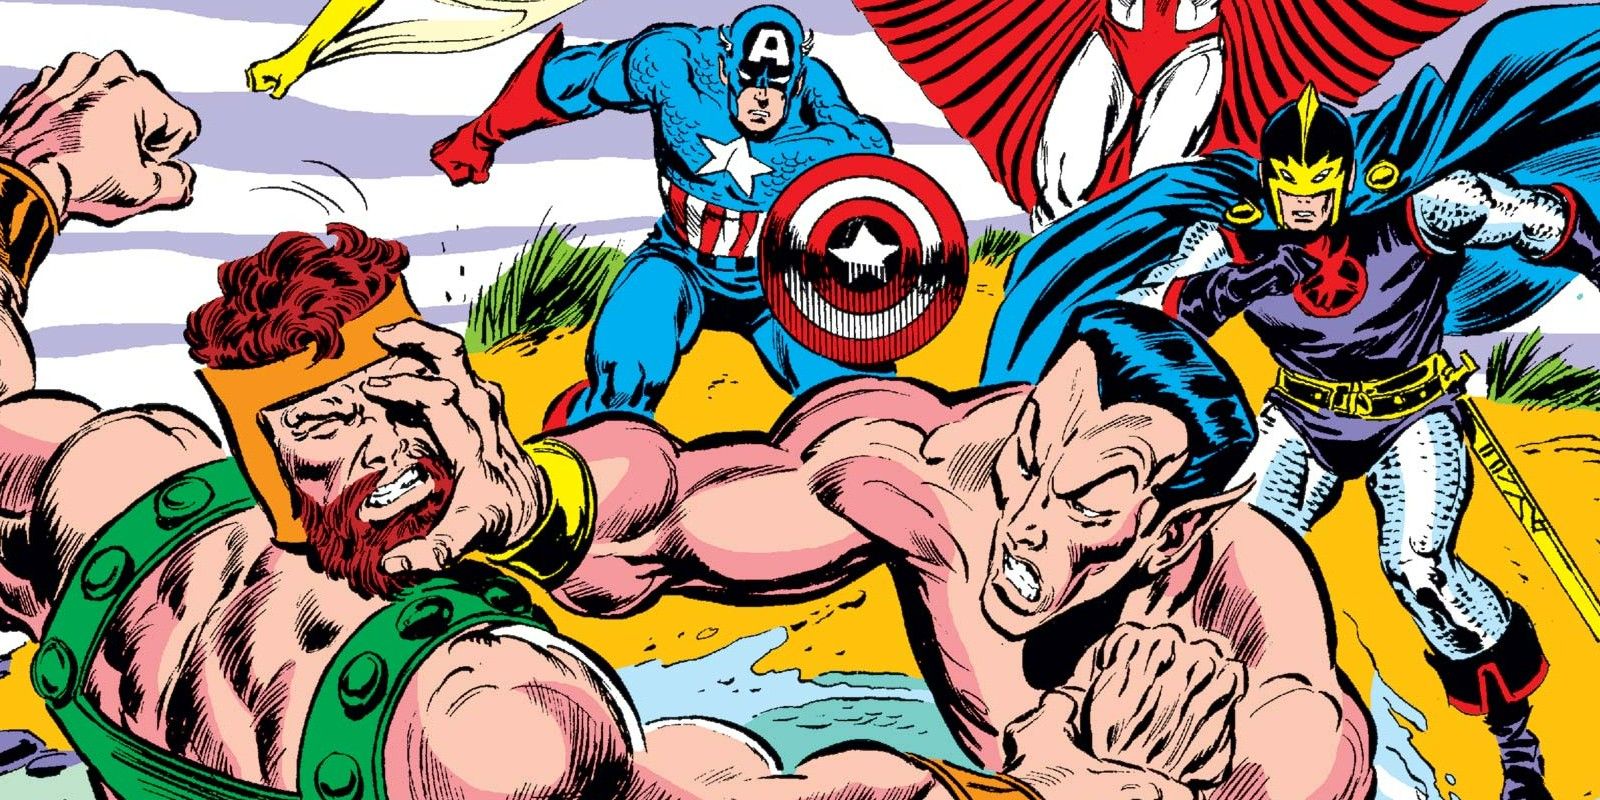 Namor fighting Hercules on the cover of 1985's Avengers #262